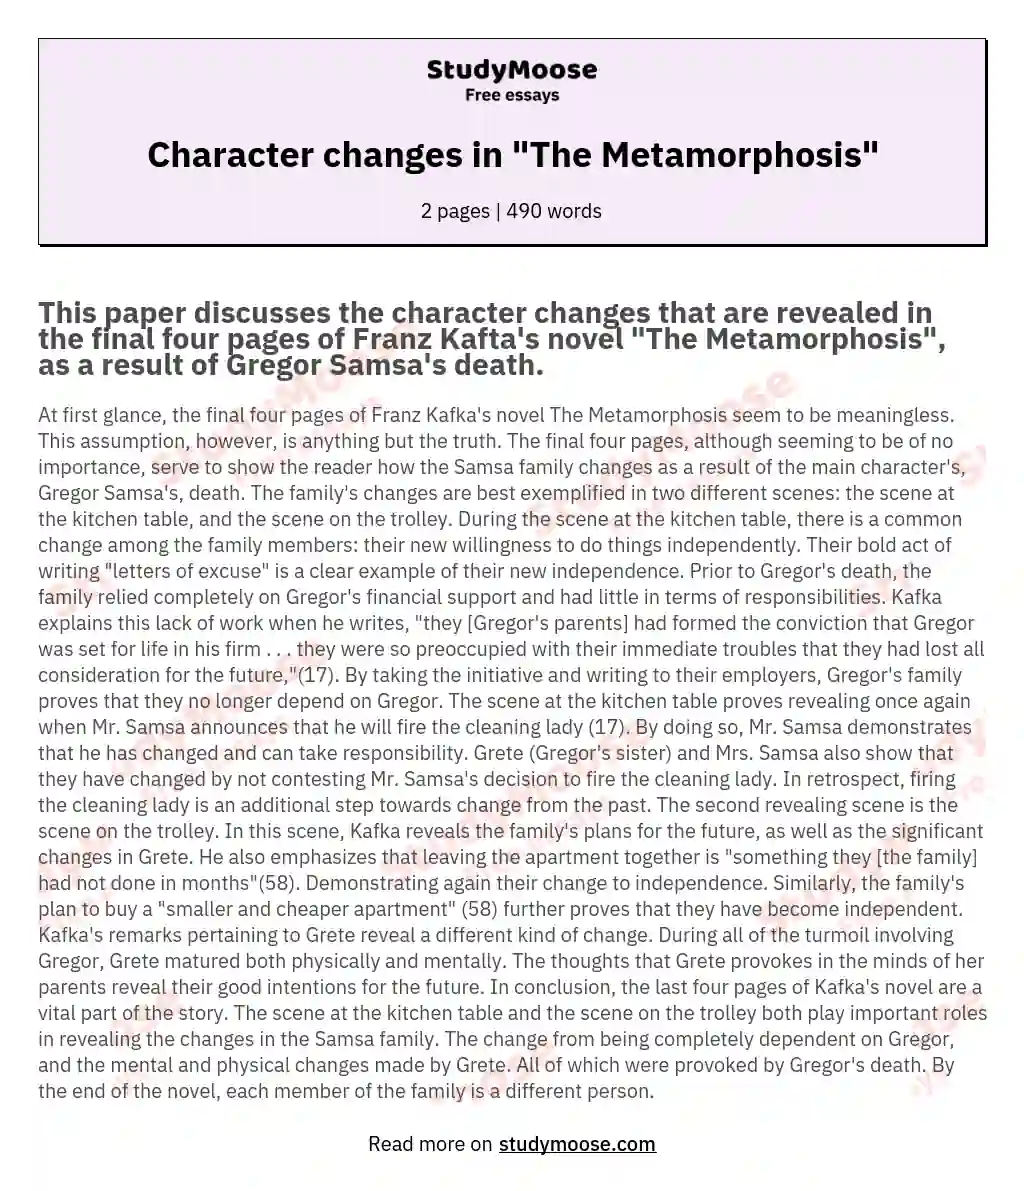 Character changes in "The Metamorphosis" essay